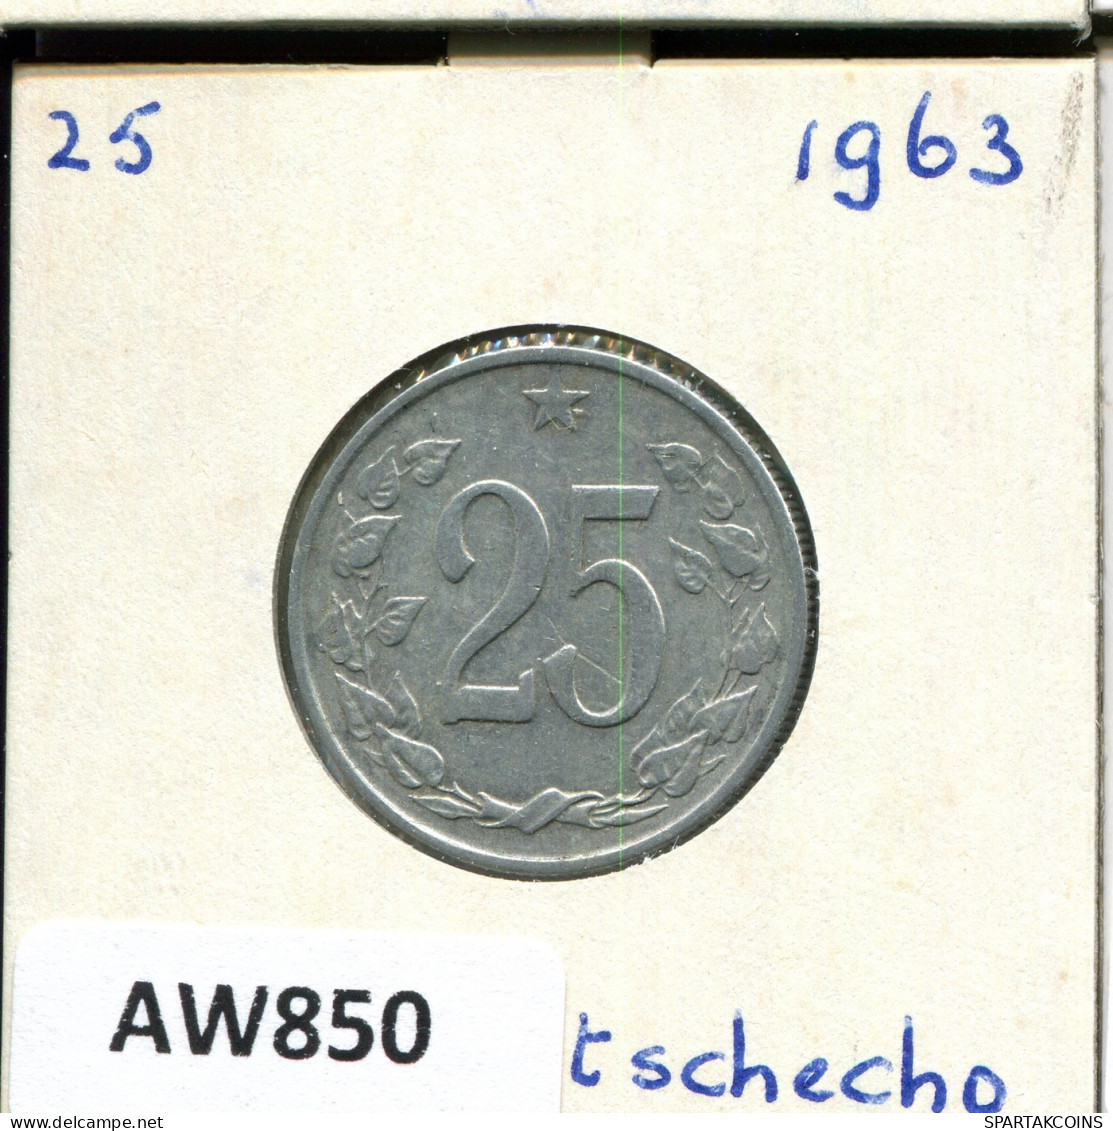 25 KORUN 1963 CZECHOSLOVAKIA Coin #AW850.U.A - Checoslovaquia